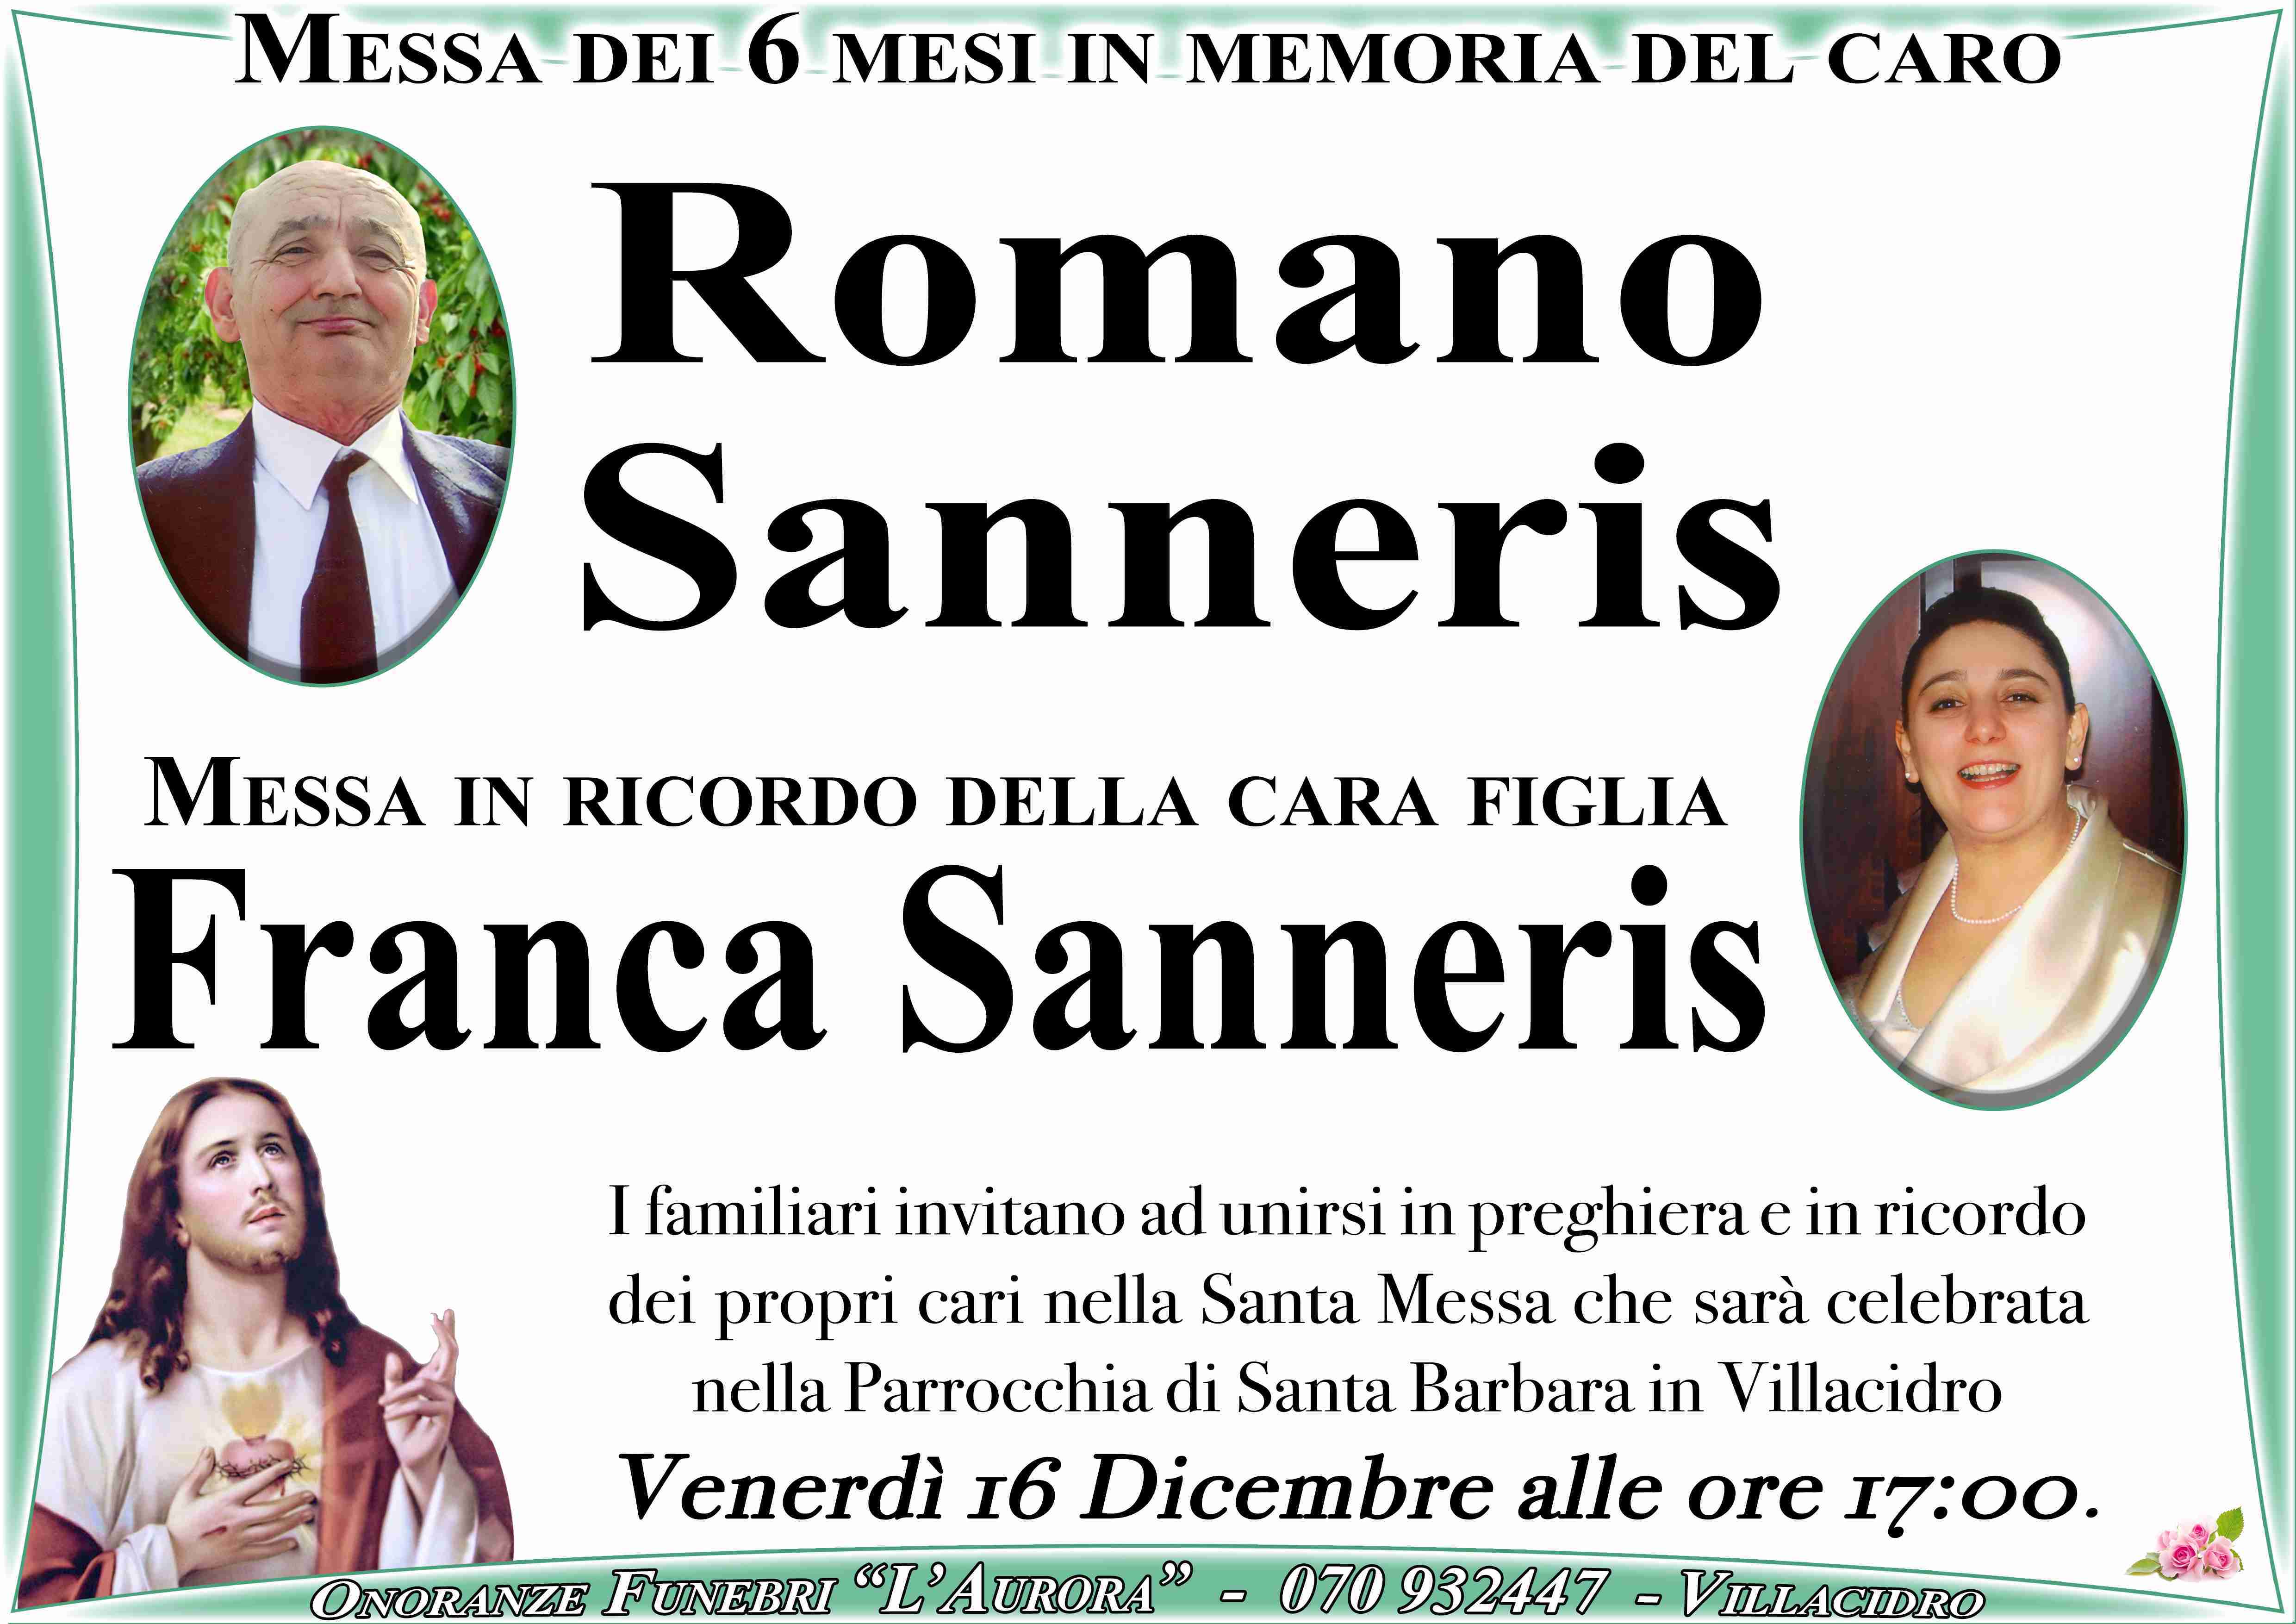 Romano Sanneris